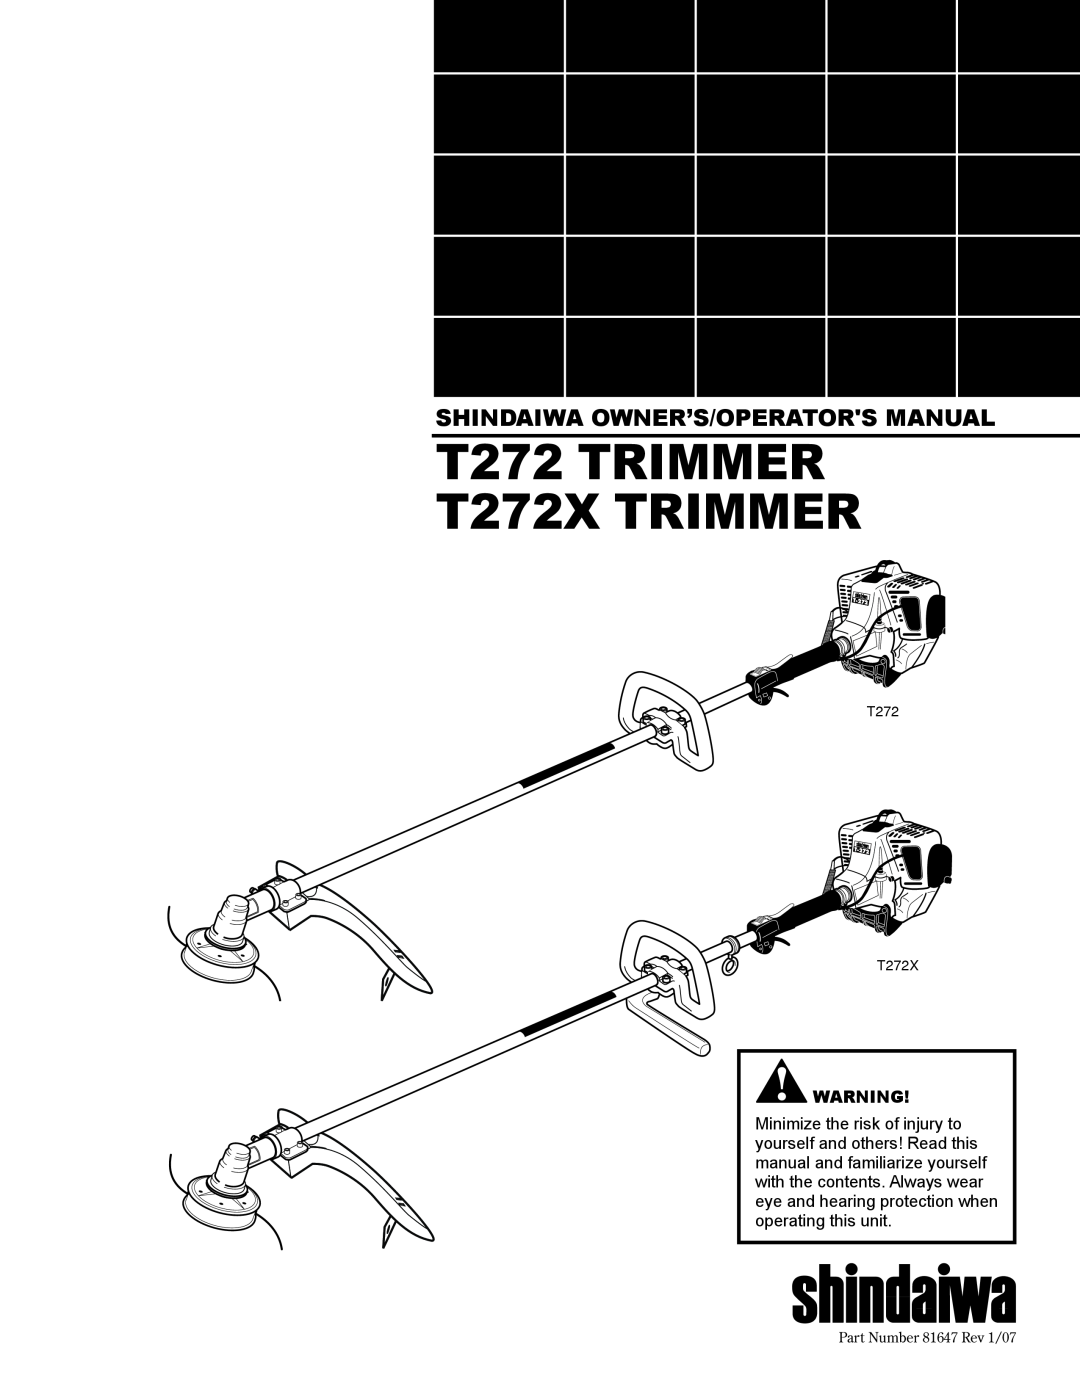 Shindaiwa manual T272 TRIMMER T272X TRIMMER, Shindaiwa Owner’S/Operators Manual, T272 T272X 